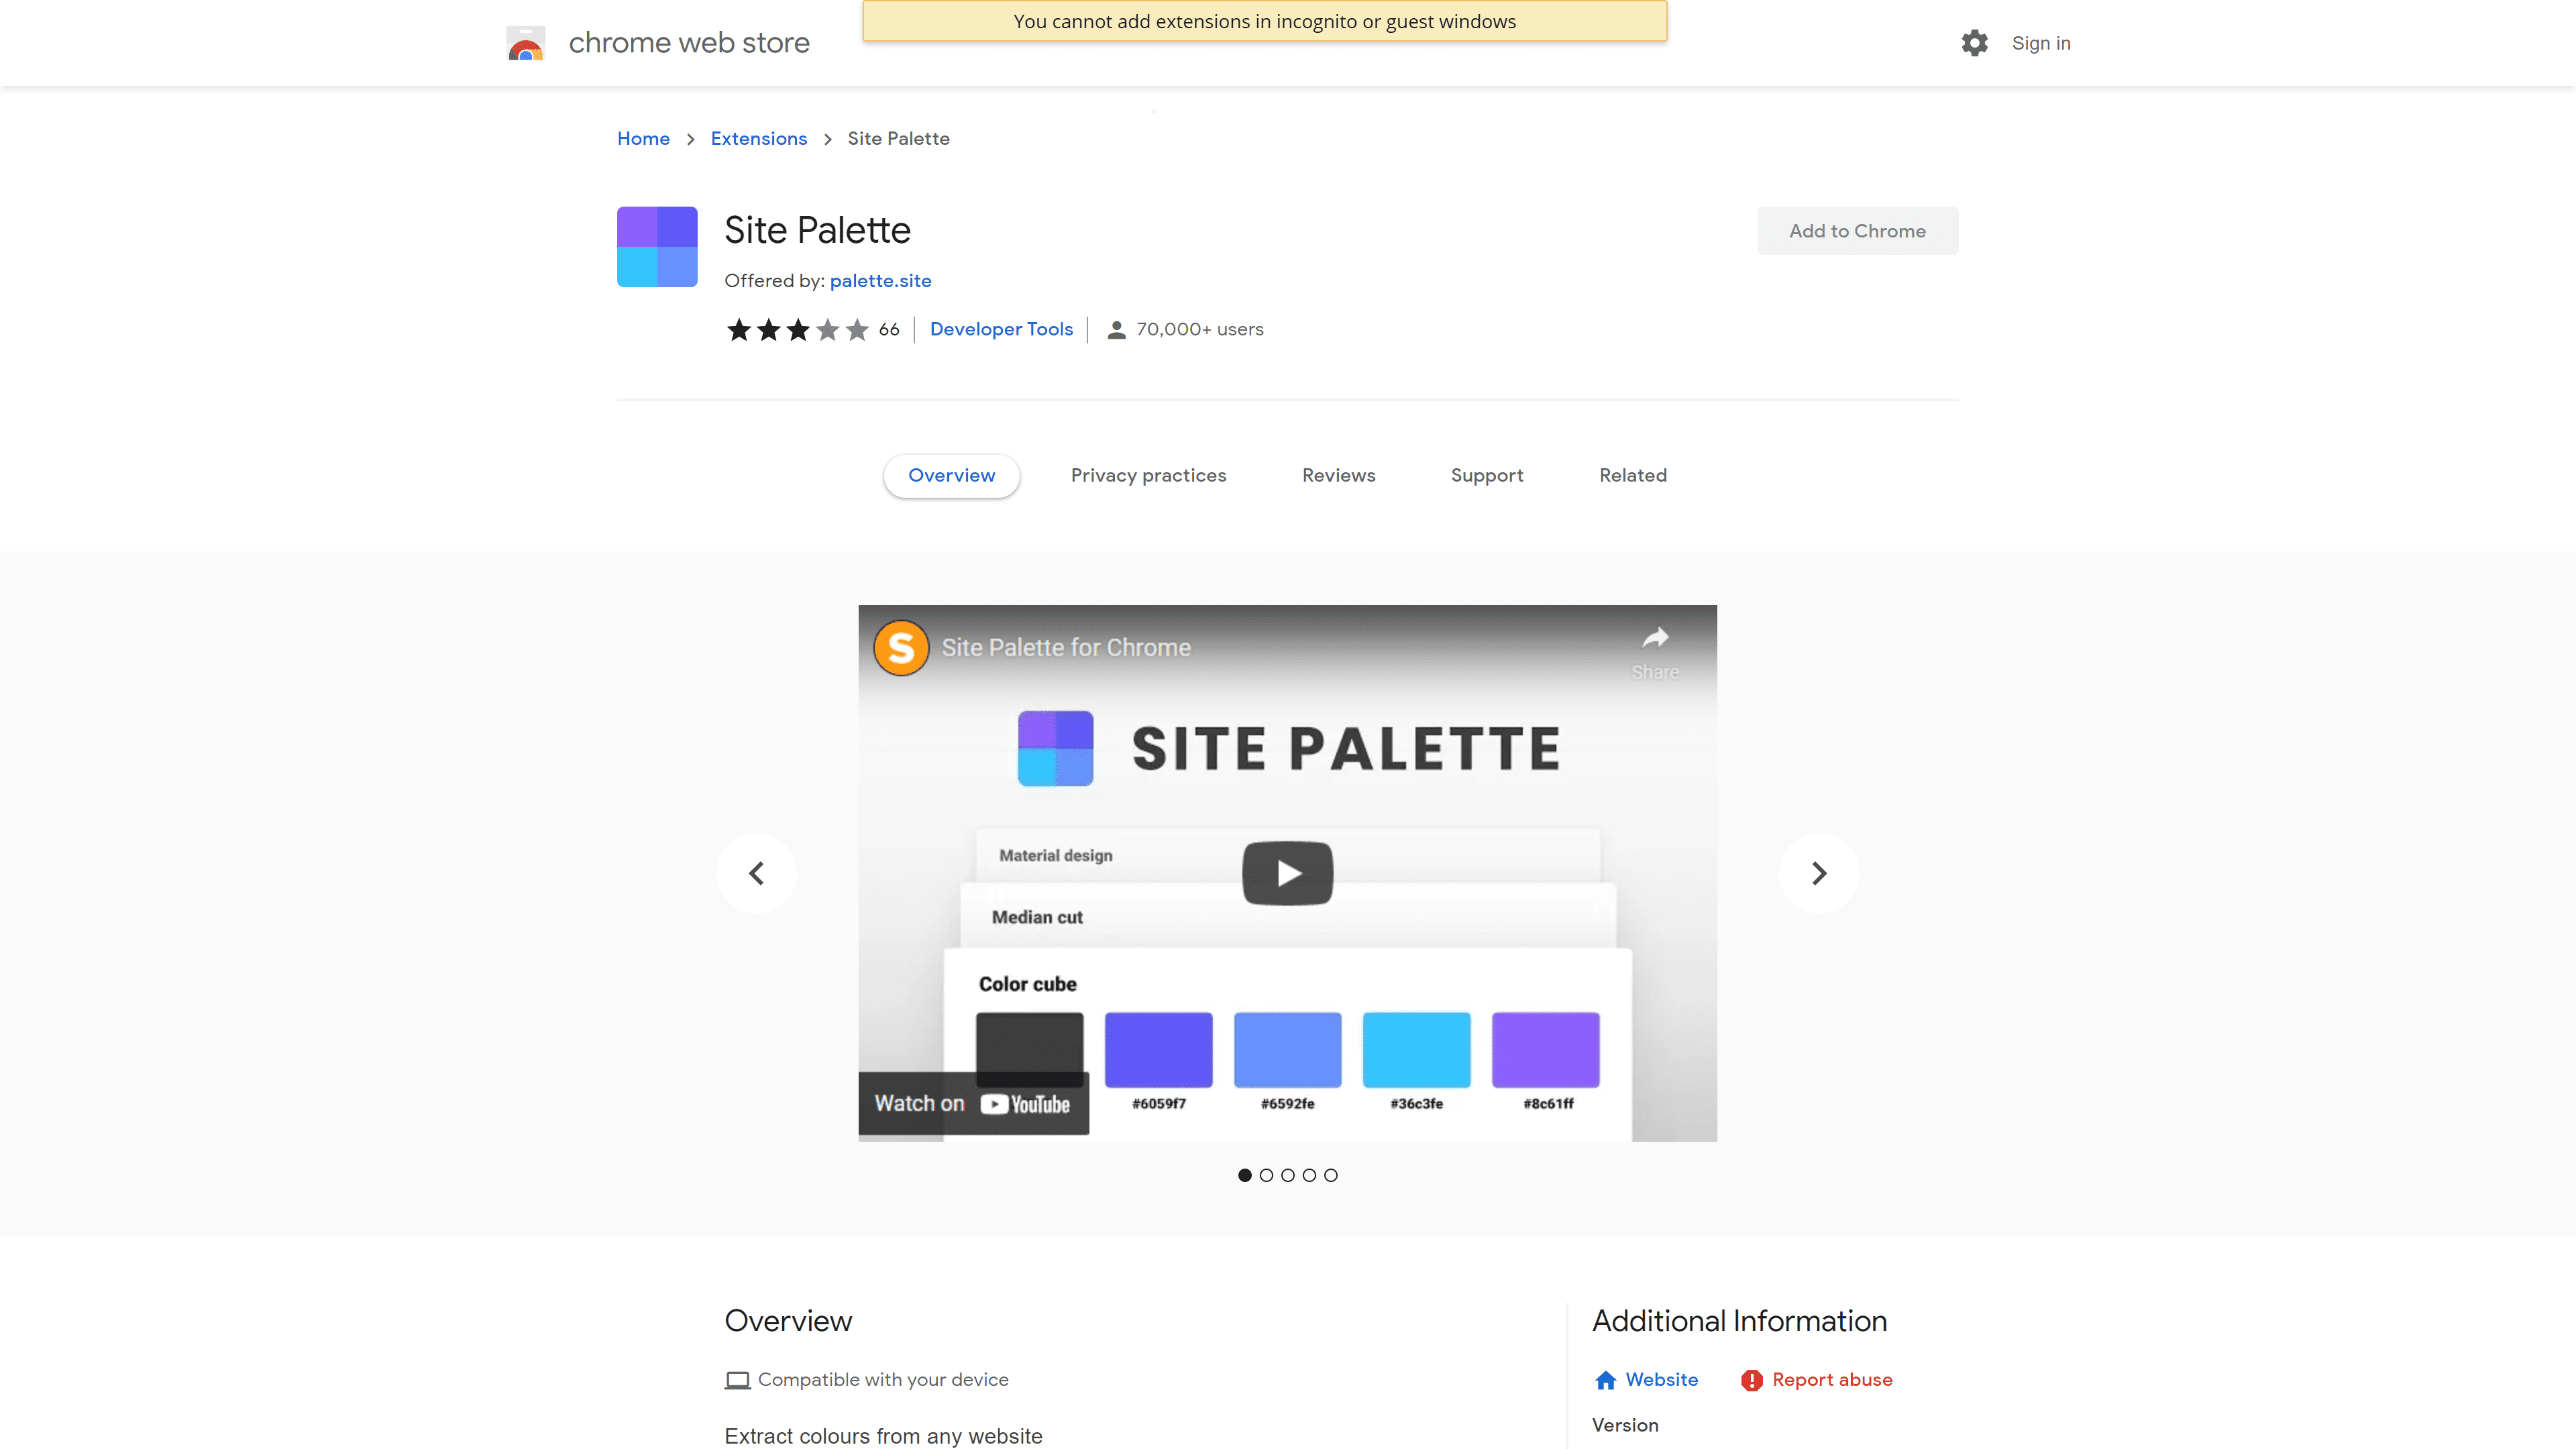 Site Palette